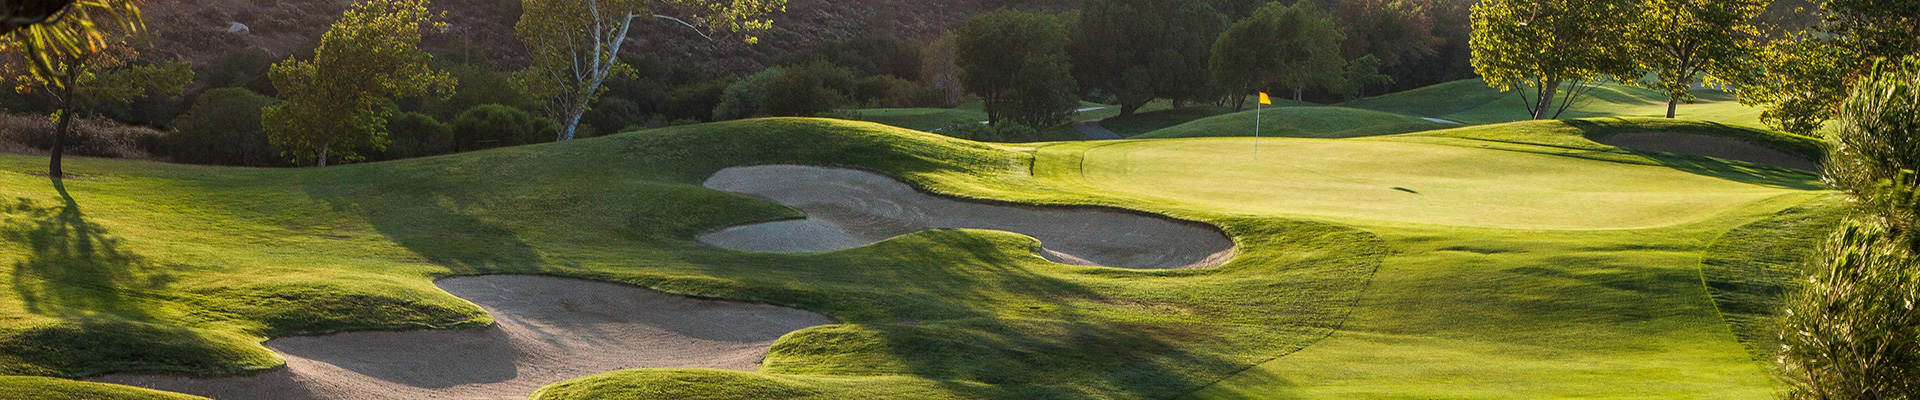 sunlit golf course